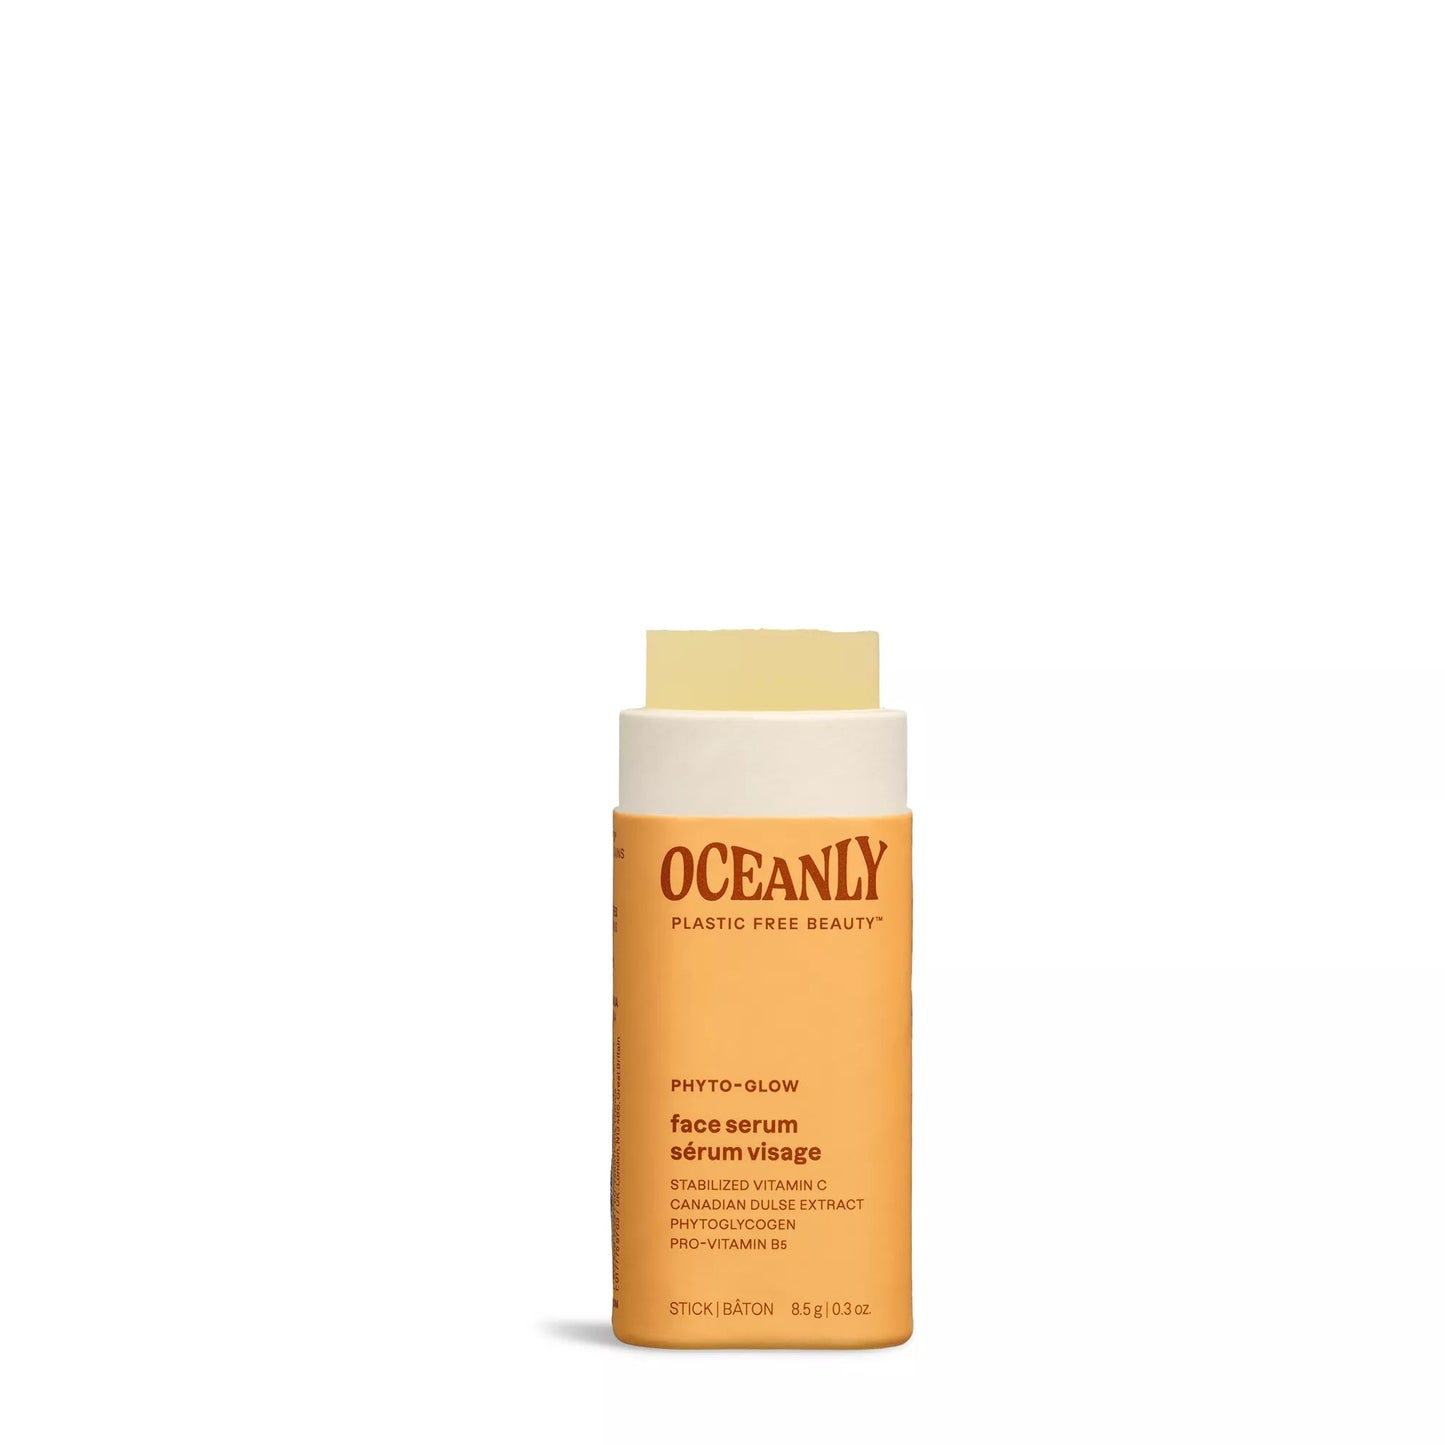 ATTITUDE oceanly phyto-glow mini serum visage 16083_fr? 8.5g Sans odeur